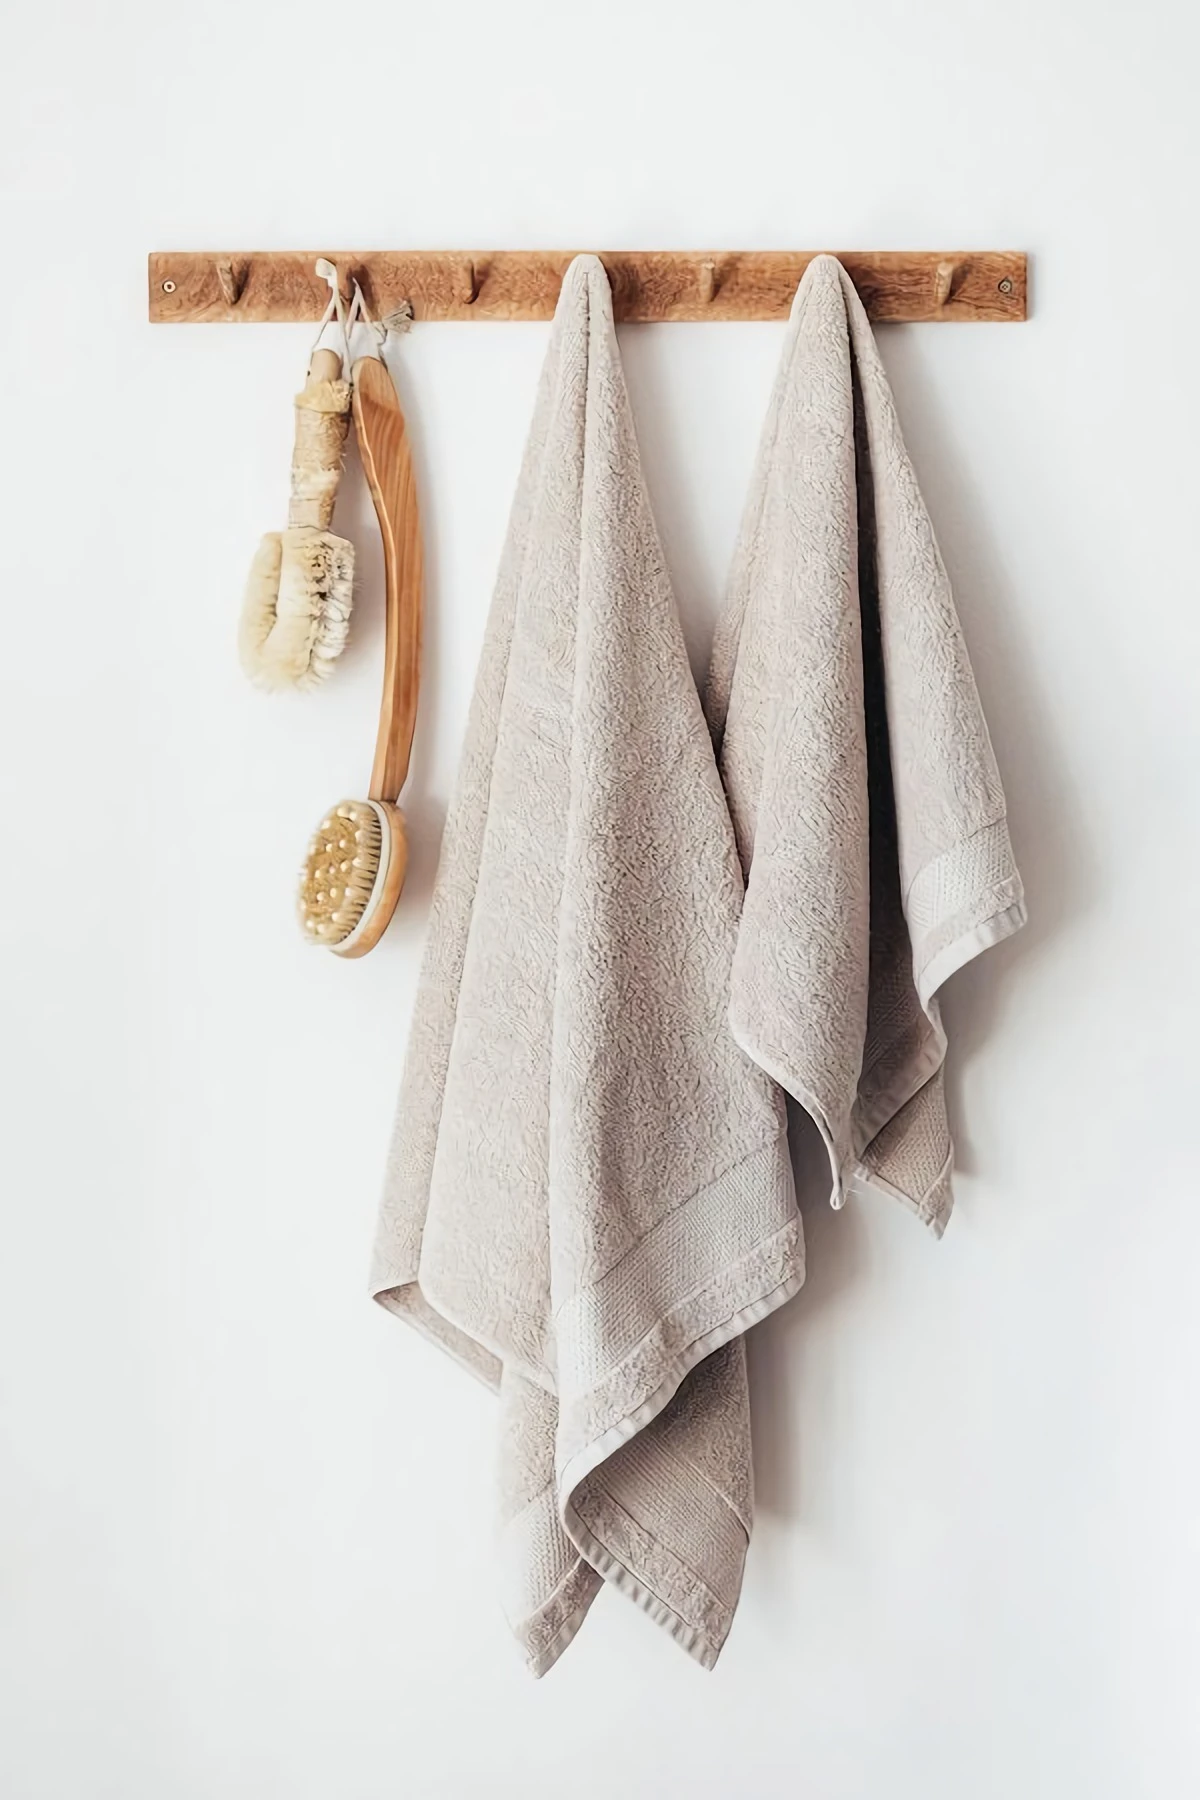 fresh set of towels hanging